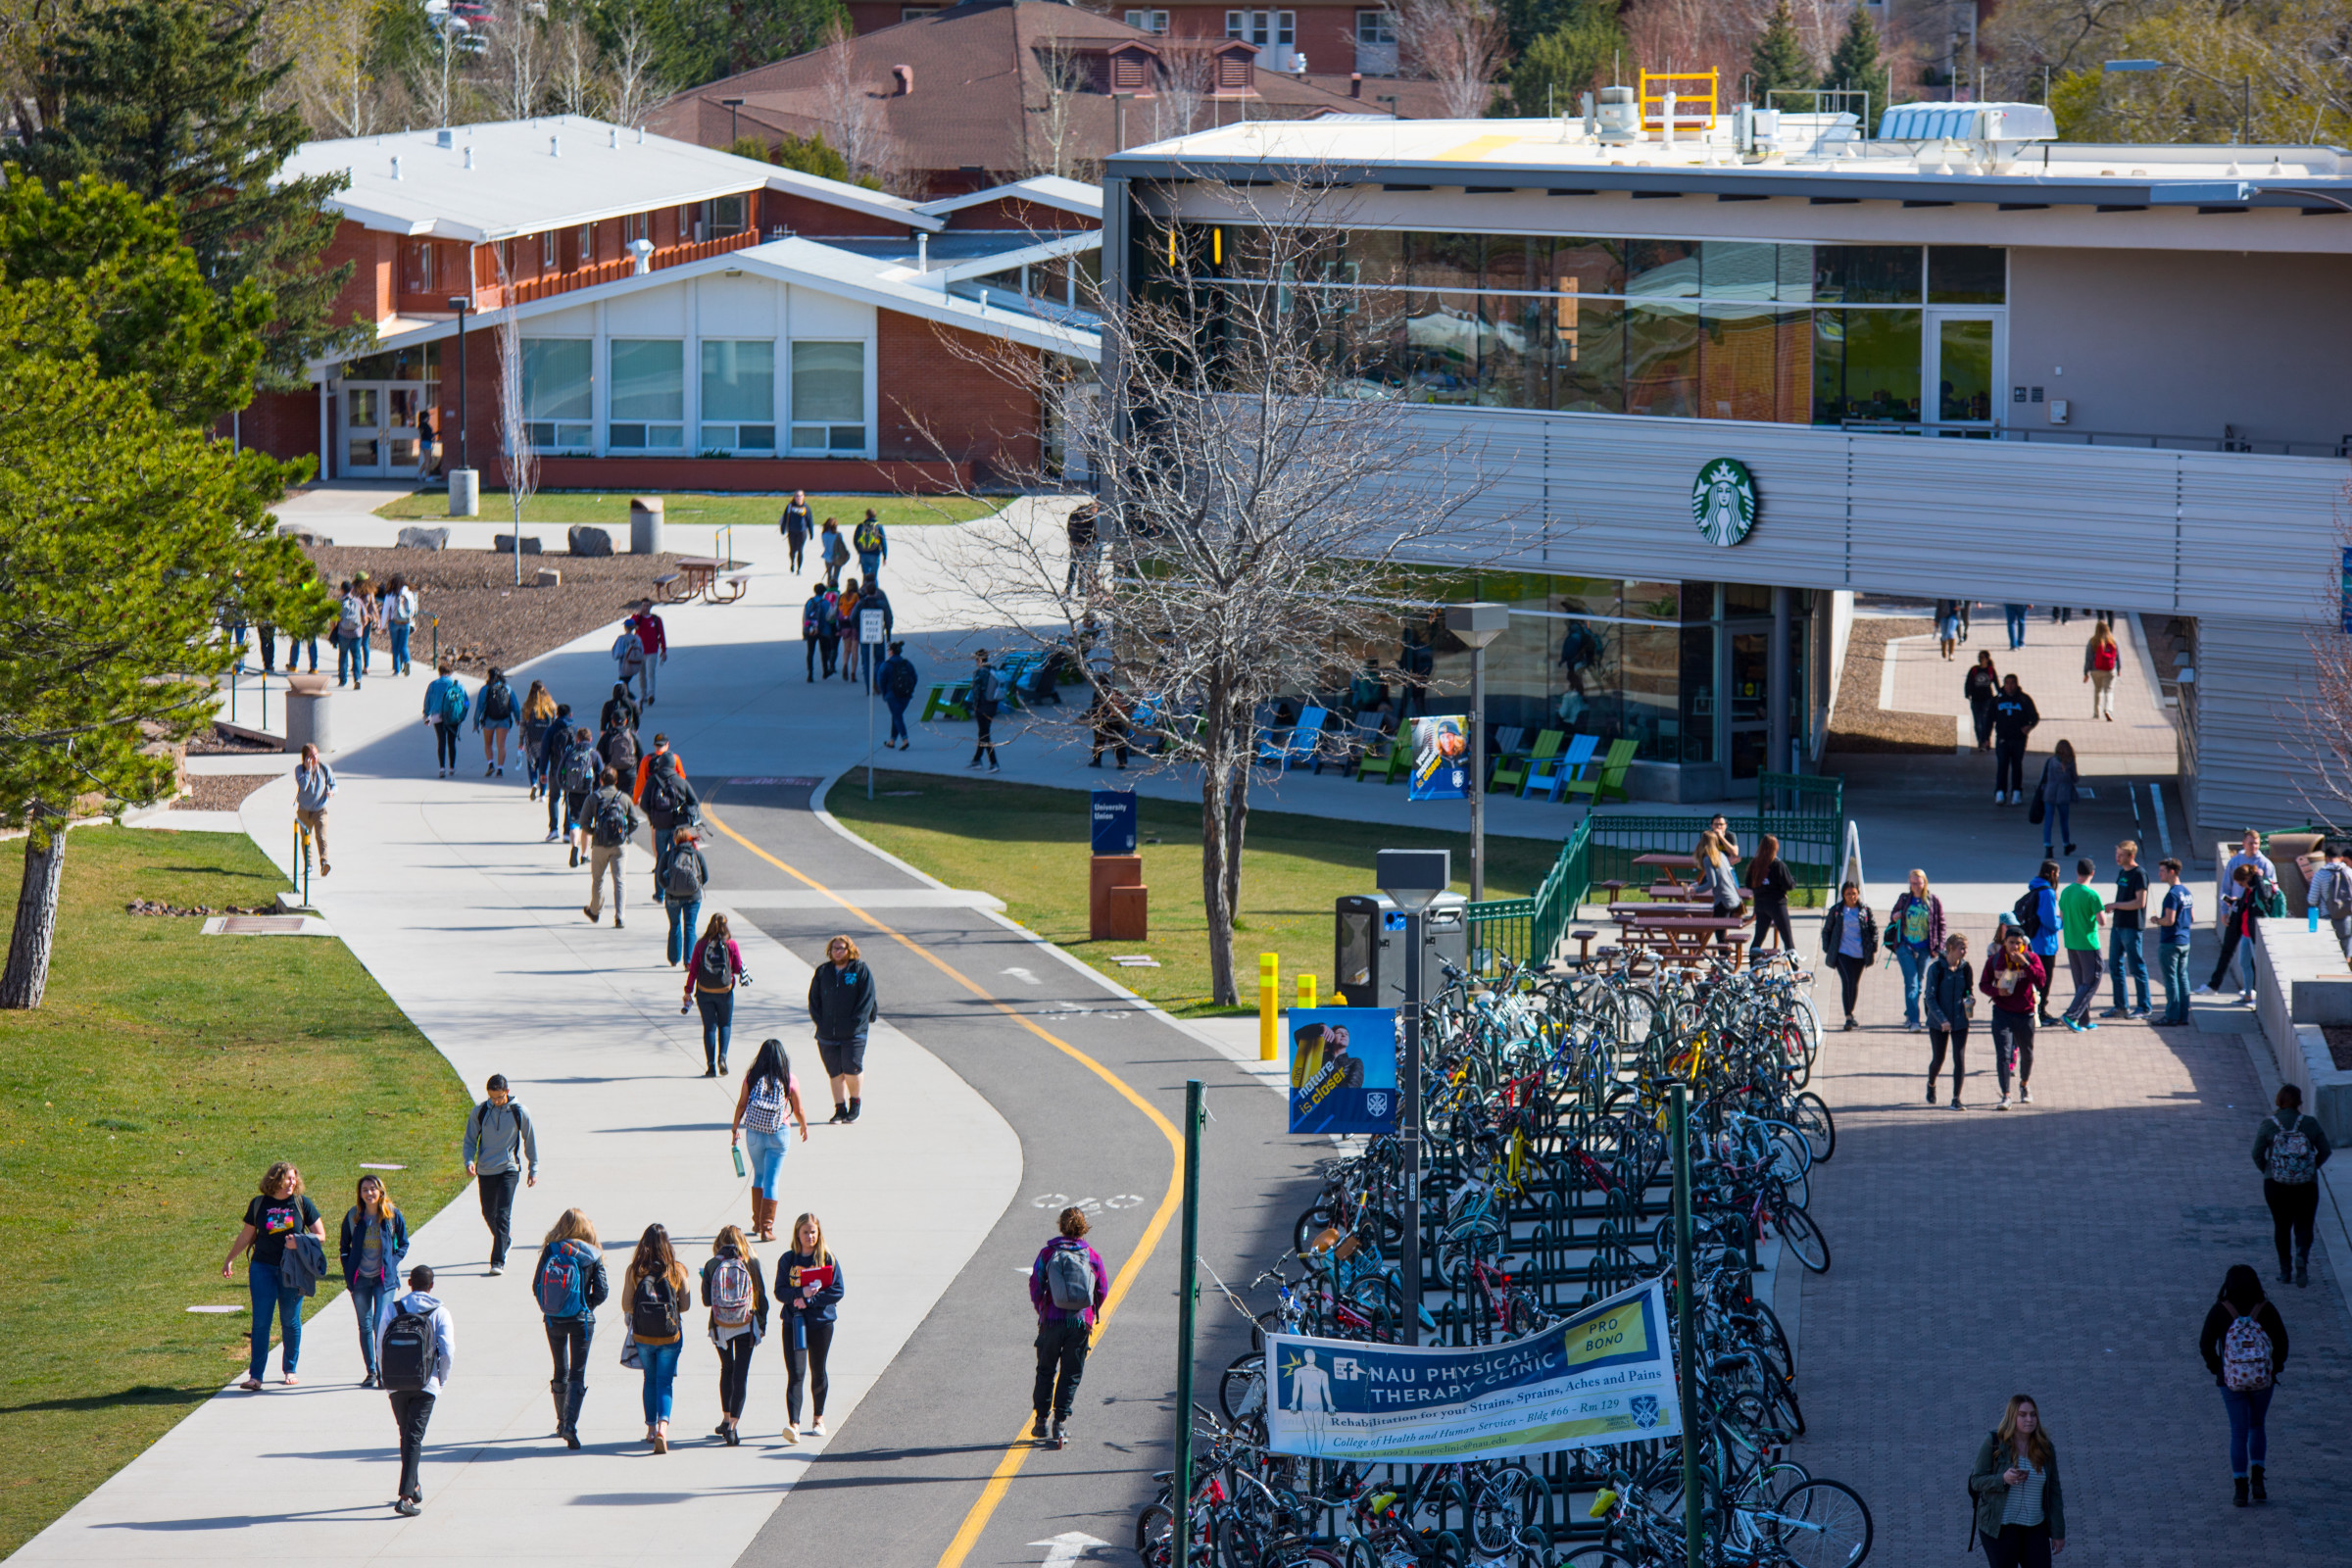 Students walking through campus next to the campus Starbucks.